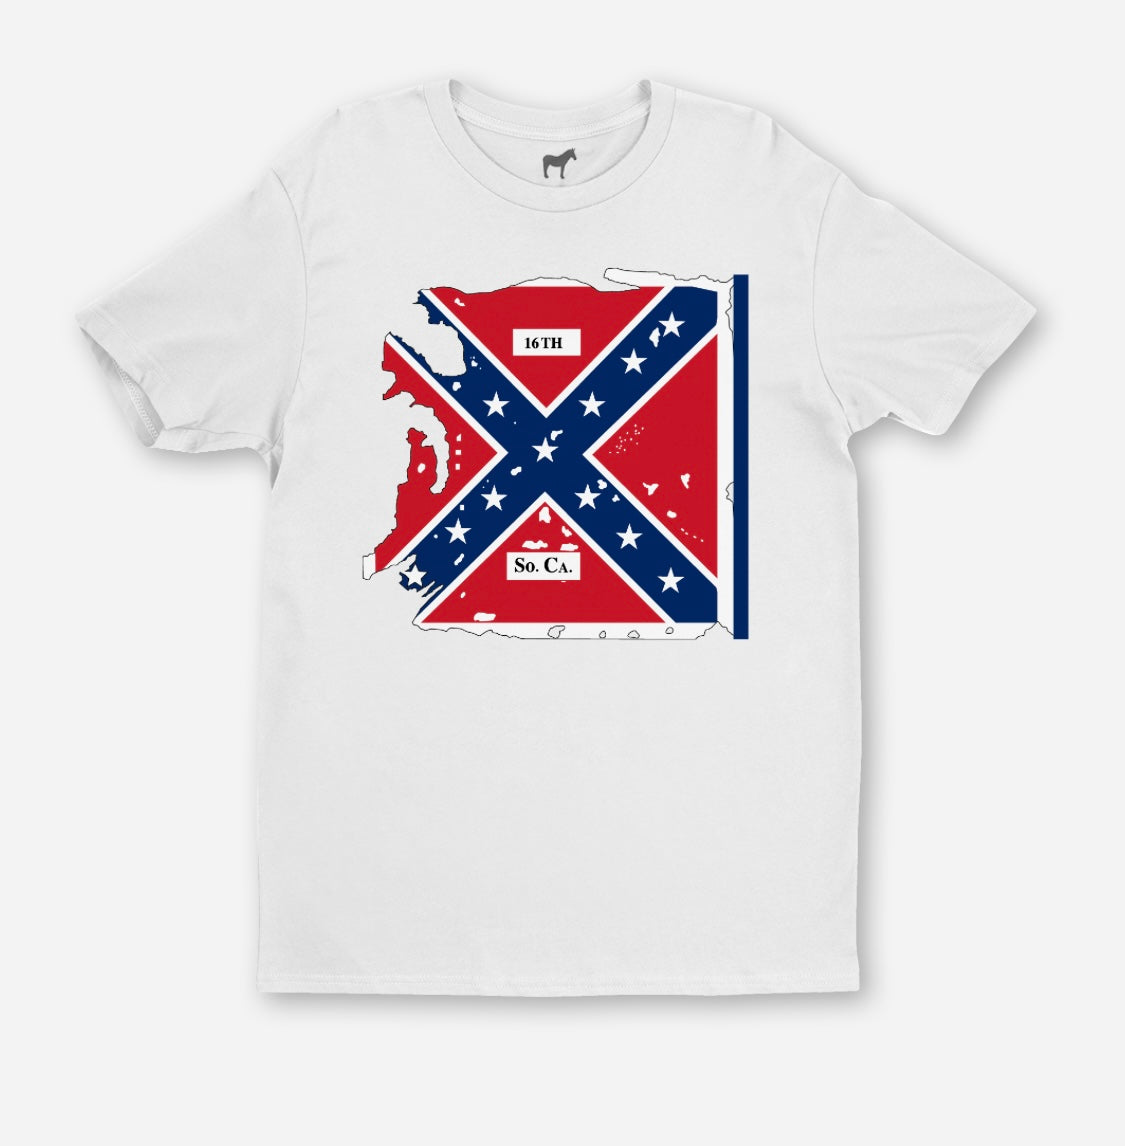 "Greenville Boys" 16th South Carolina Infantry Flag Shirt